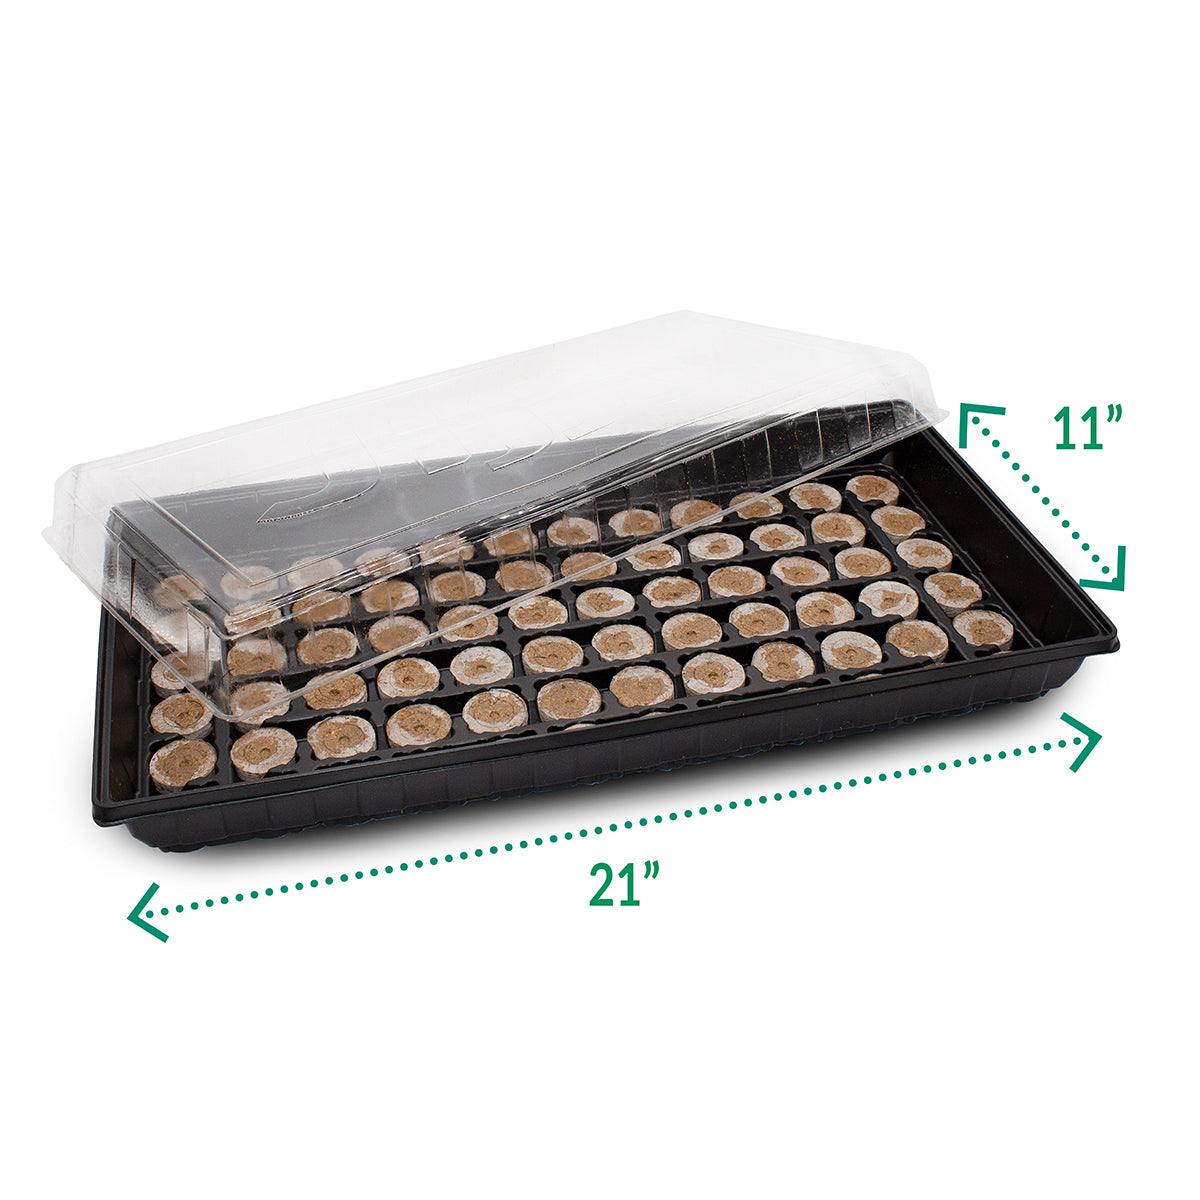 Jiffy Seed Starting Kit, 72 Cell 36mm Peat Pellets with Bonus